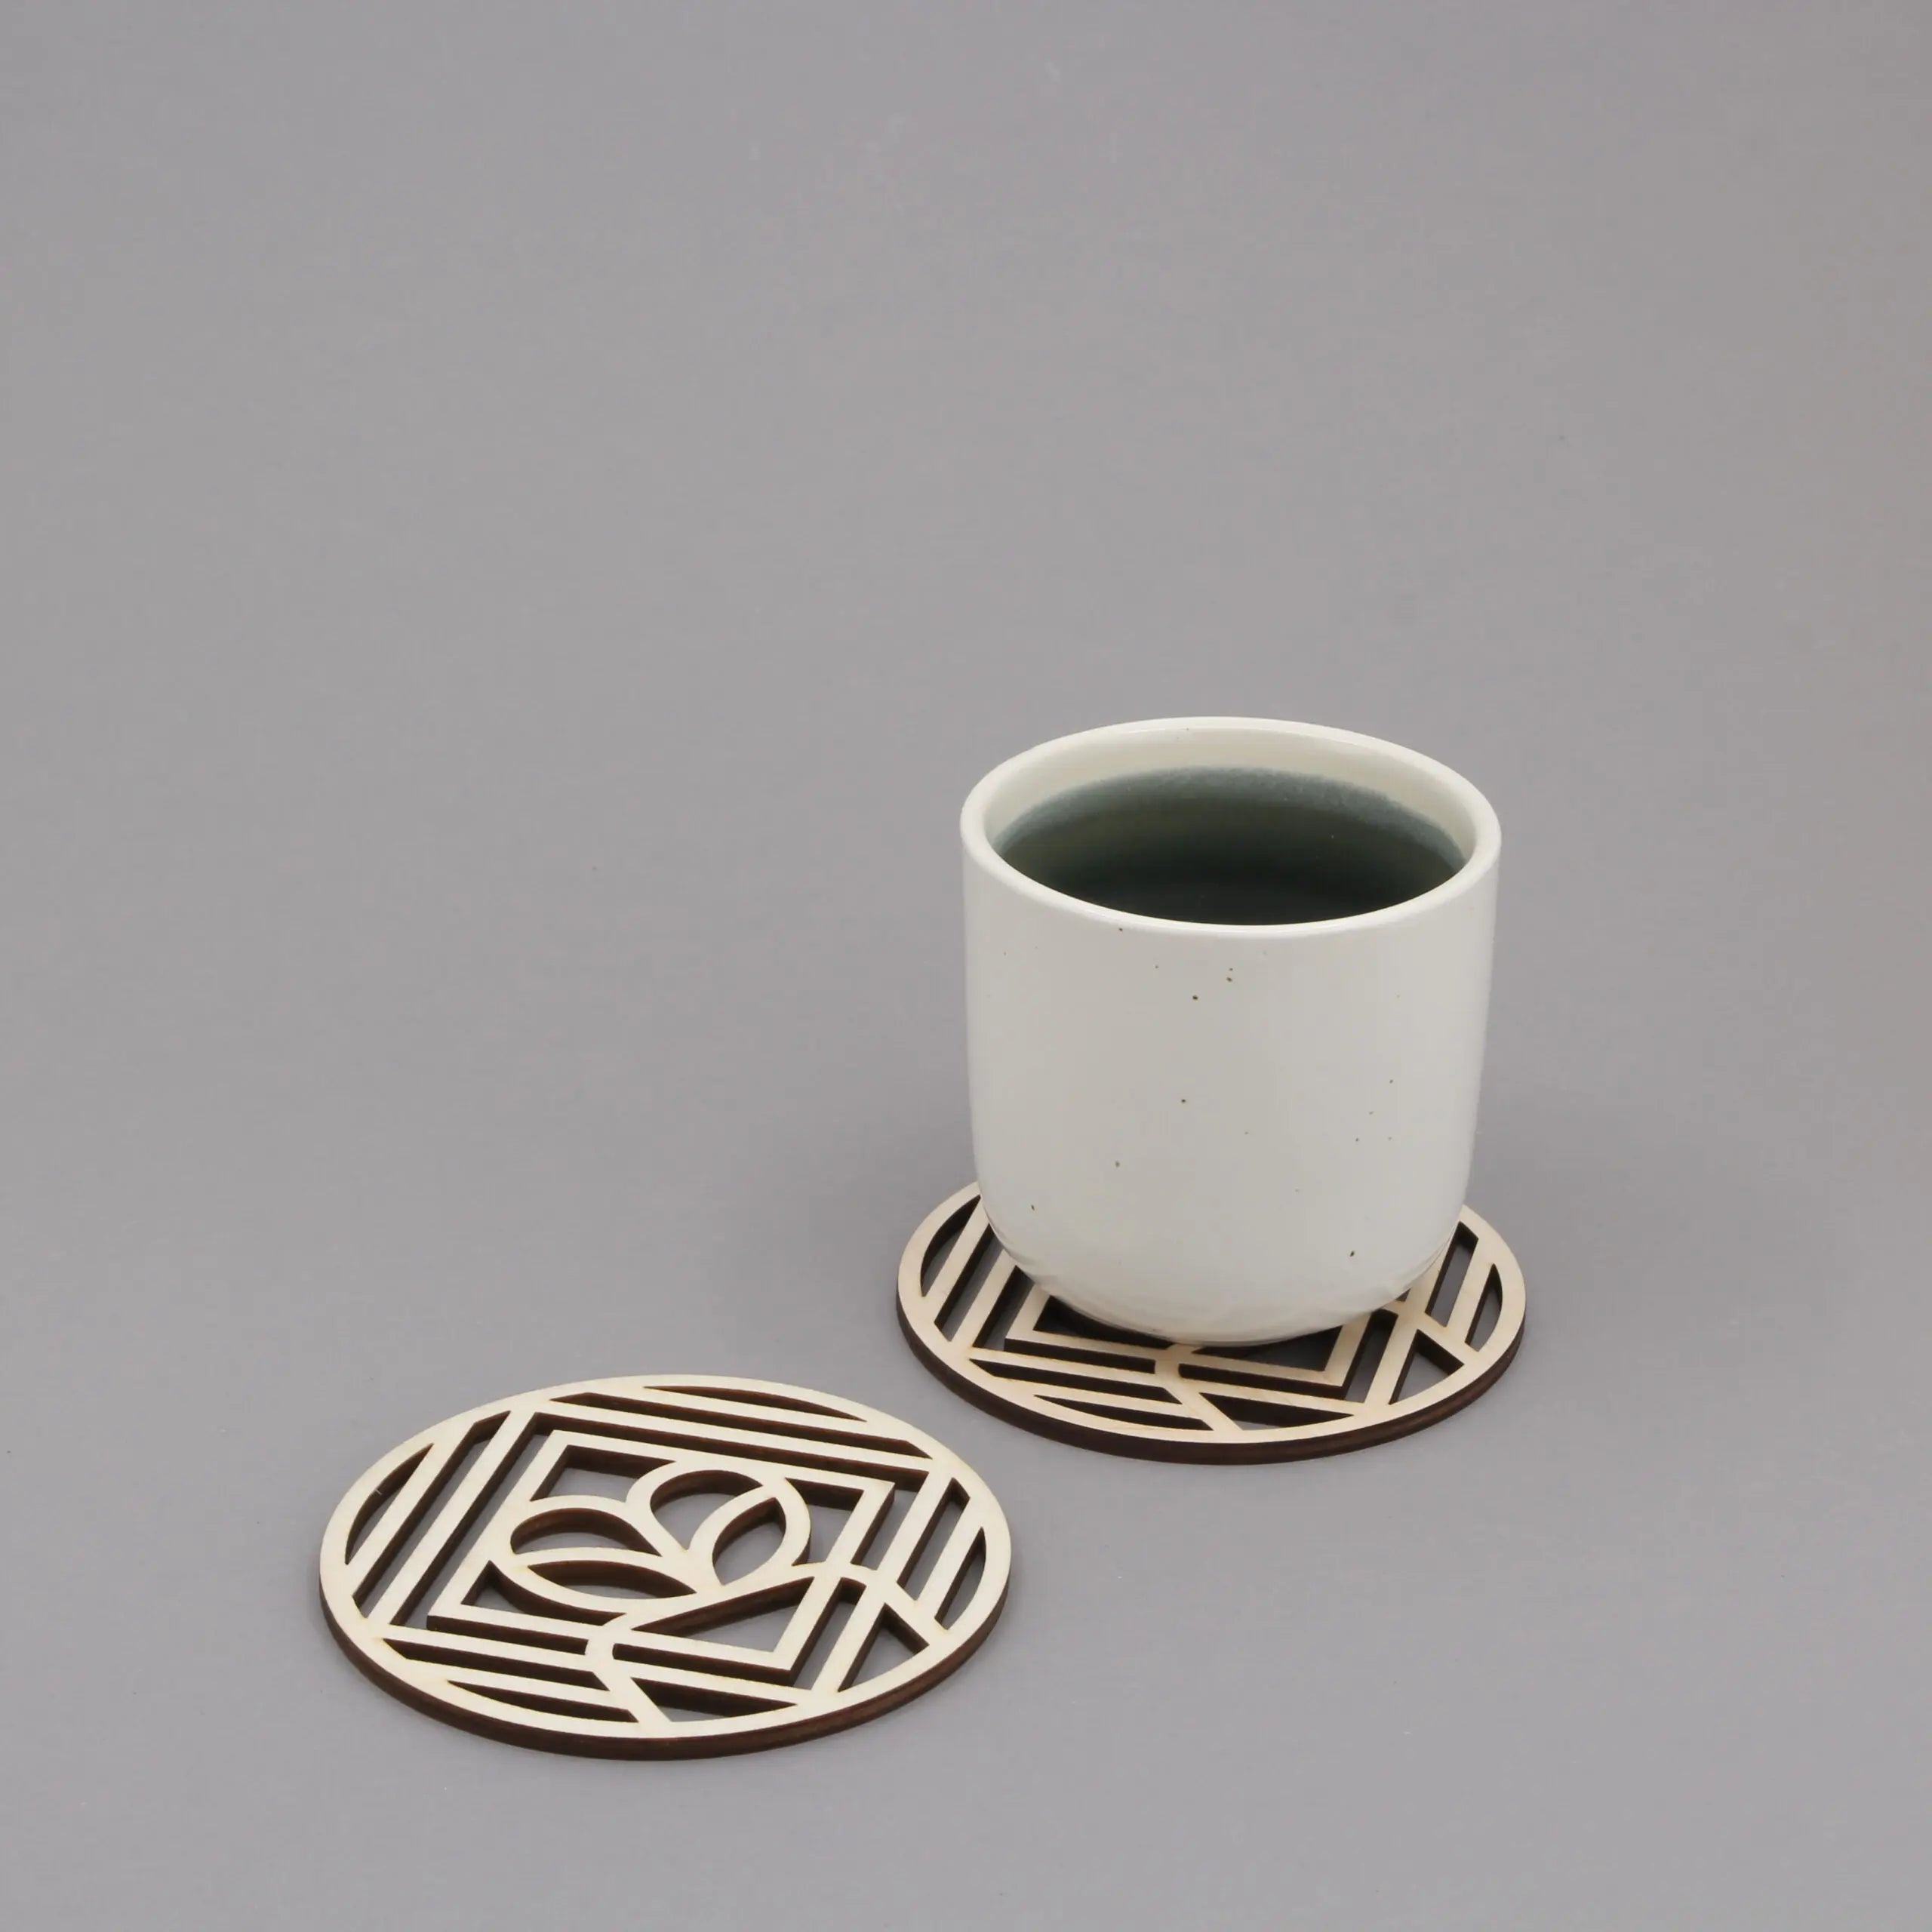 Wooden Cutout Design Coasters / Decor - SMUKHI